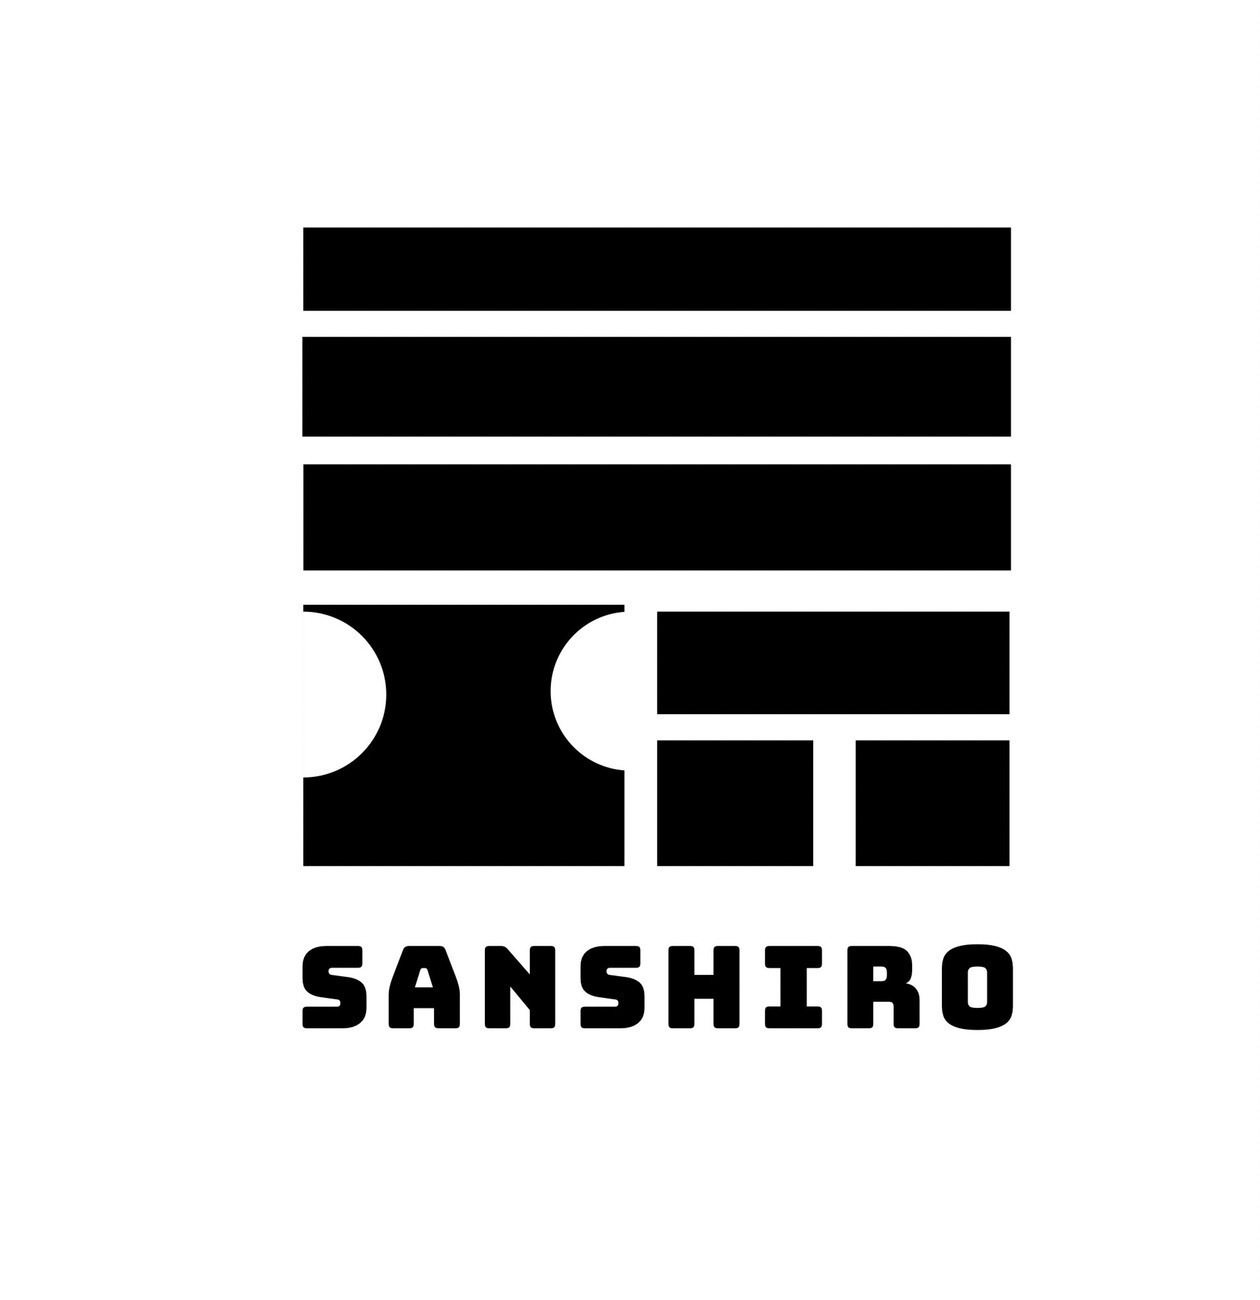 SANSHIRO